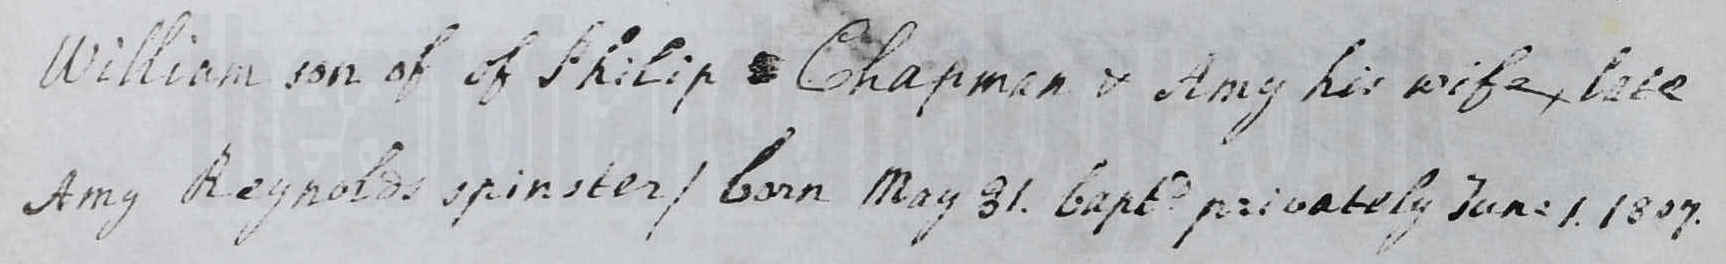 William Chapman baptism 1807